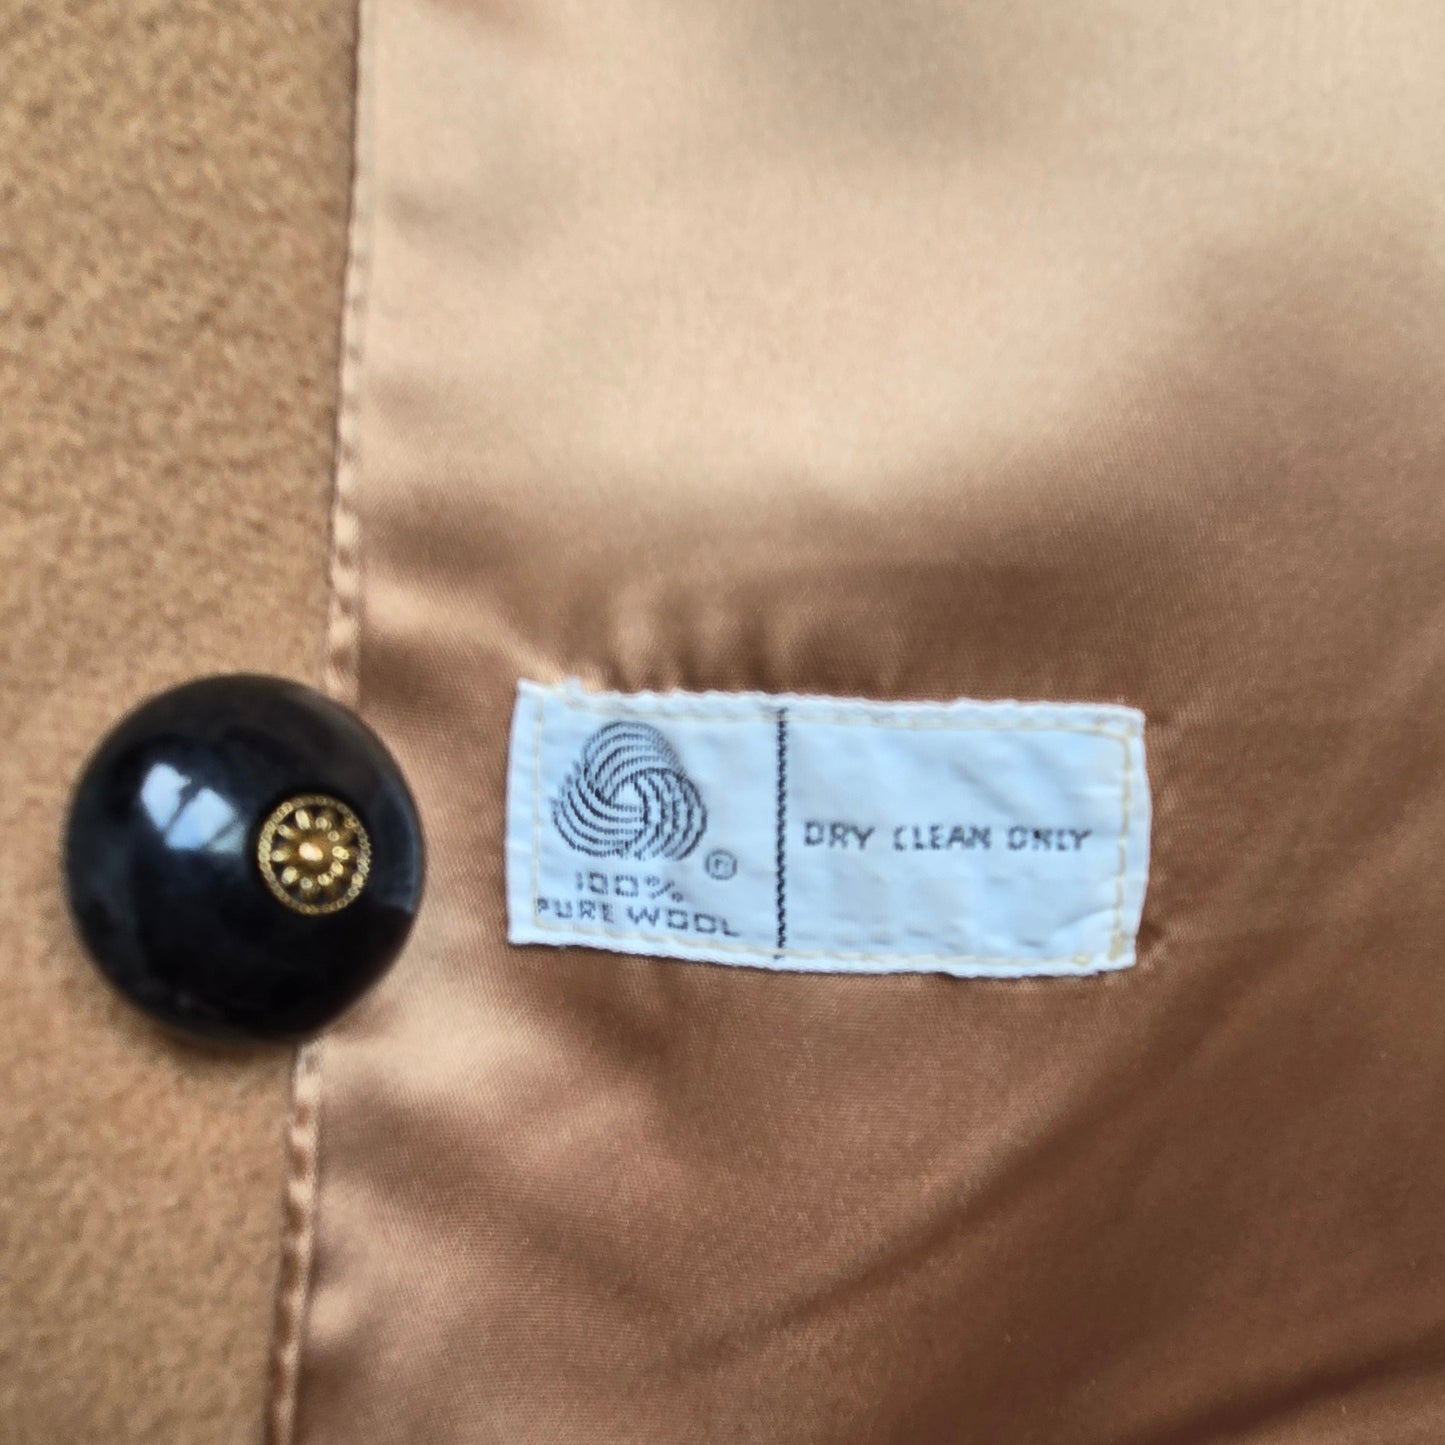 Penguin Fashions 1960s Vintage Button Down Belted Cape Jacket